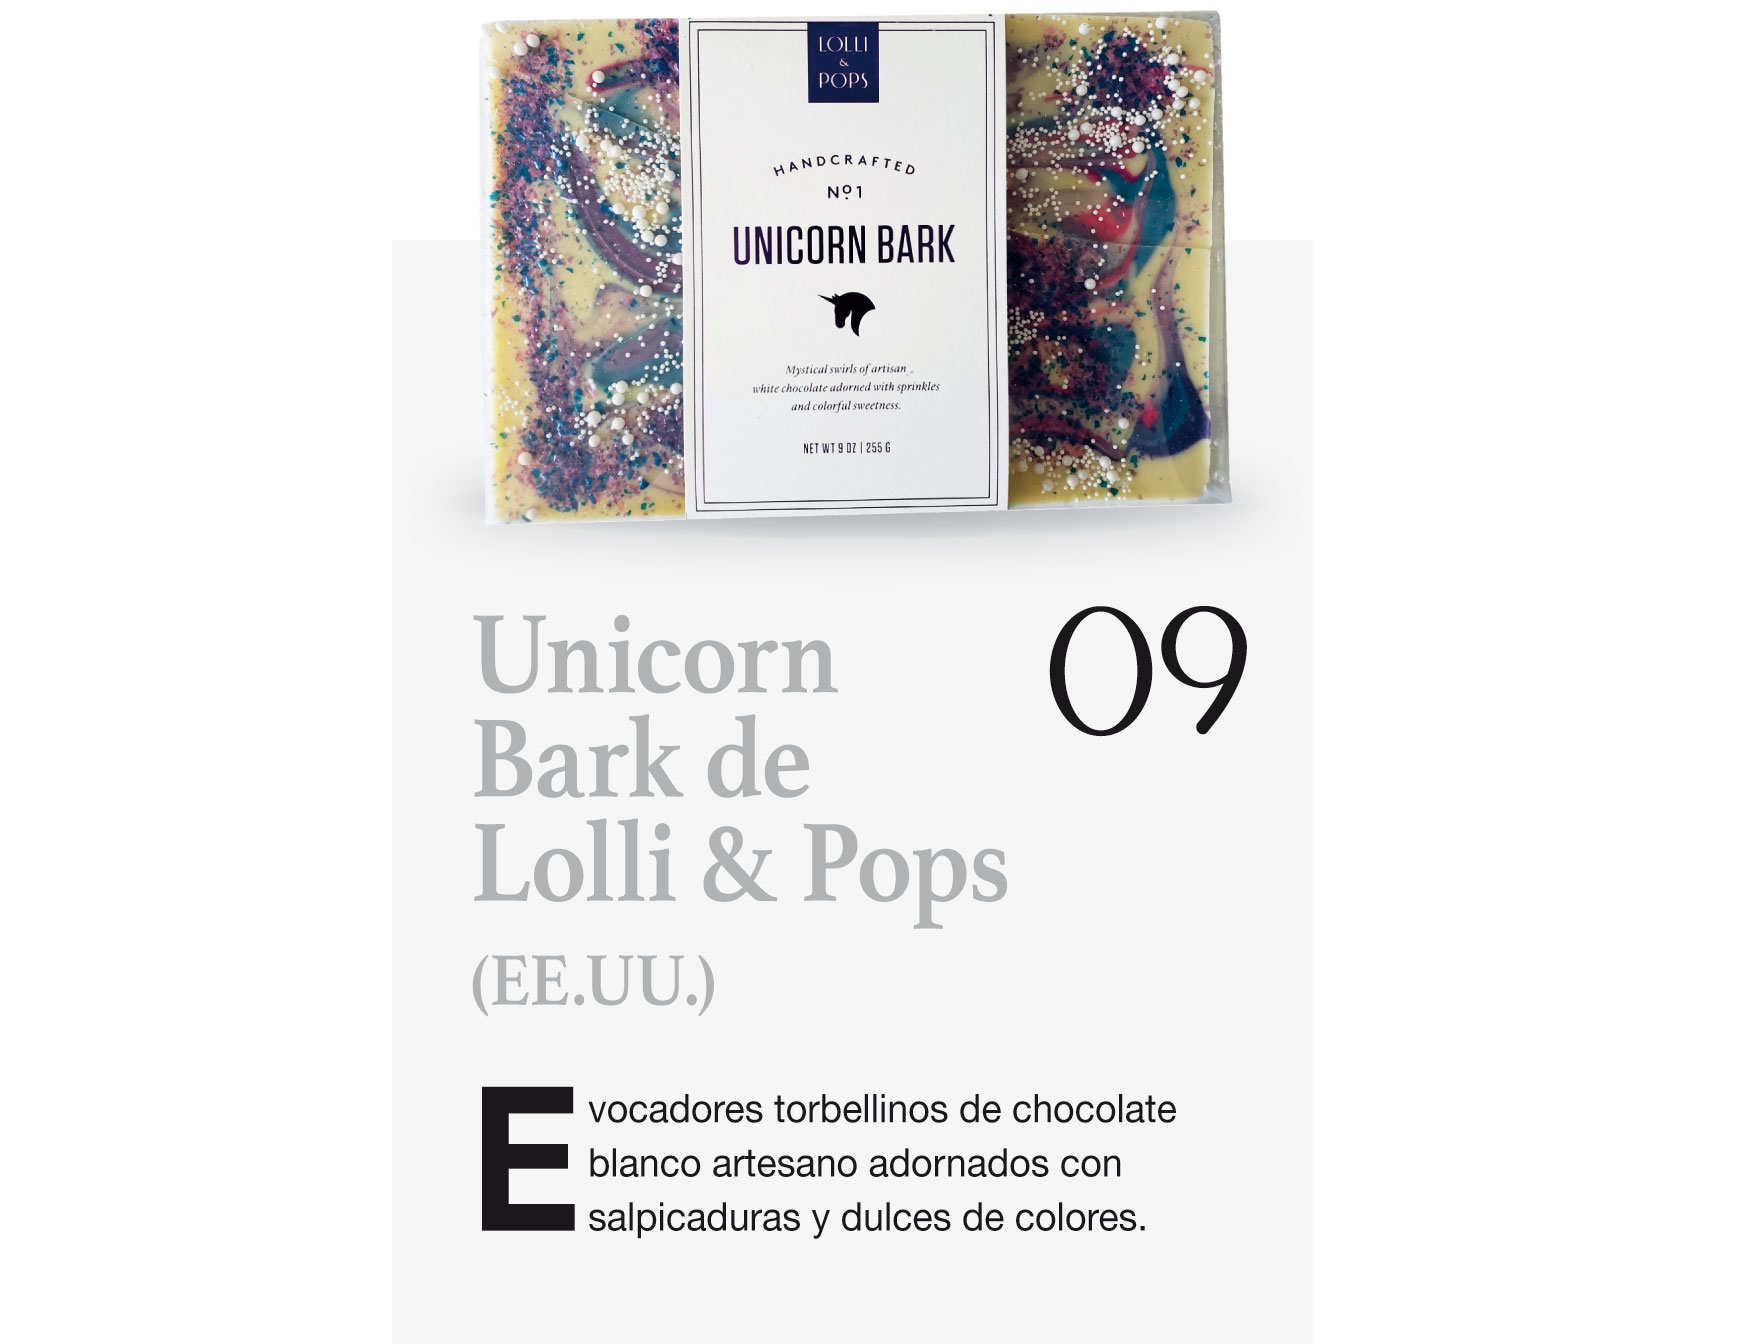 Unicorn Bark de Lolli & Pops (EE.UU.)